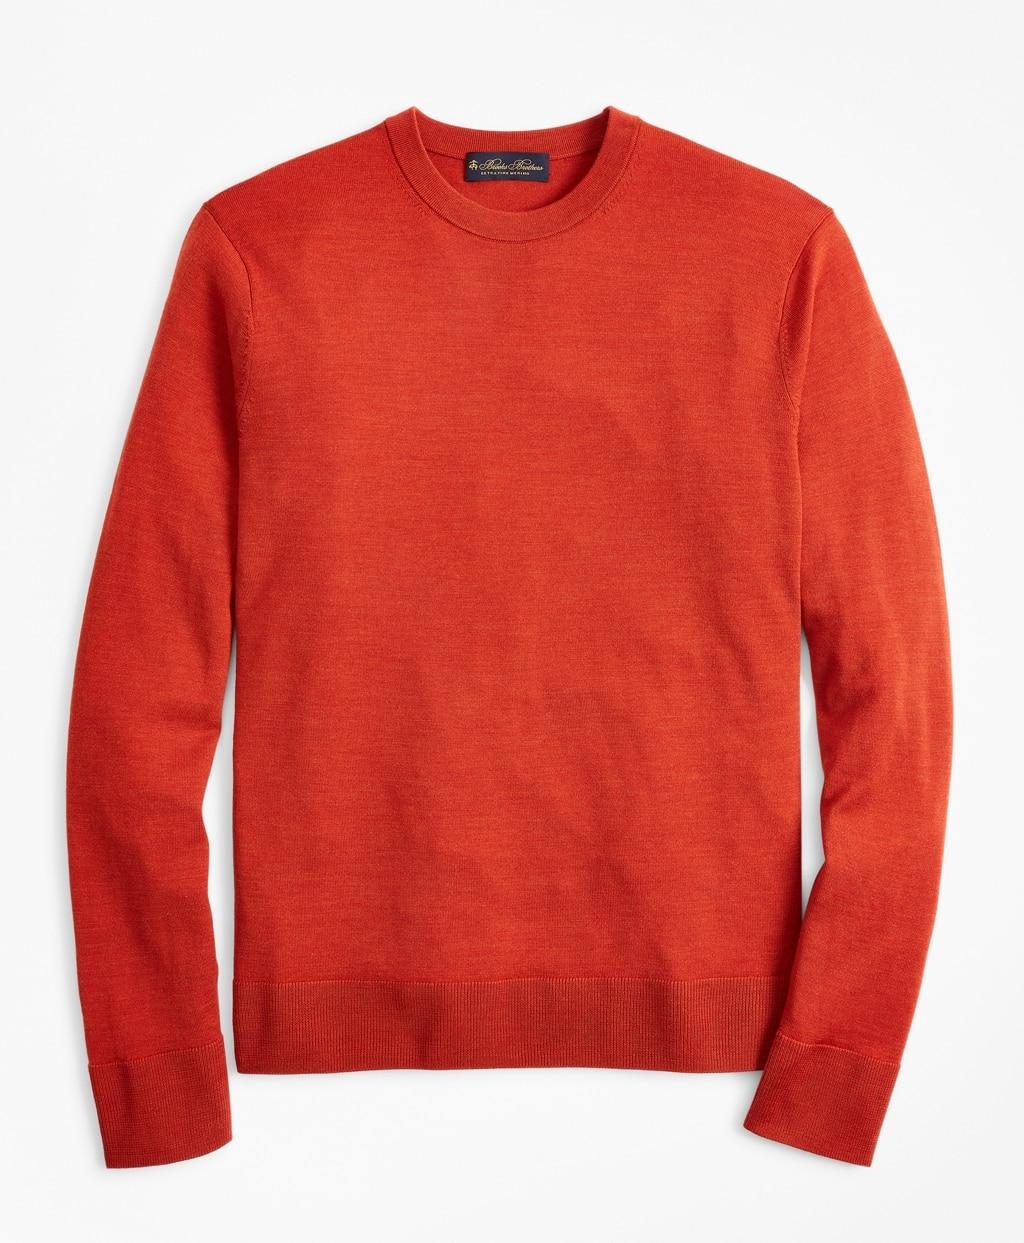 Brooks Brothers Brookstechtm Merino Wool Crewneck Sweater in Orange for ...